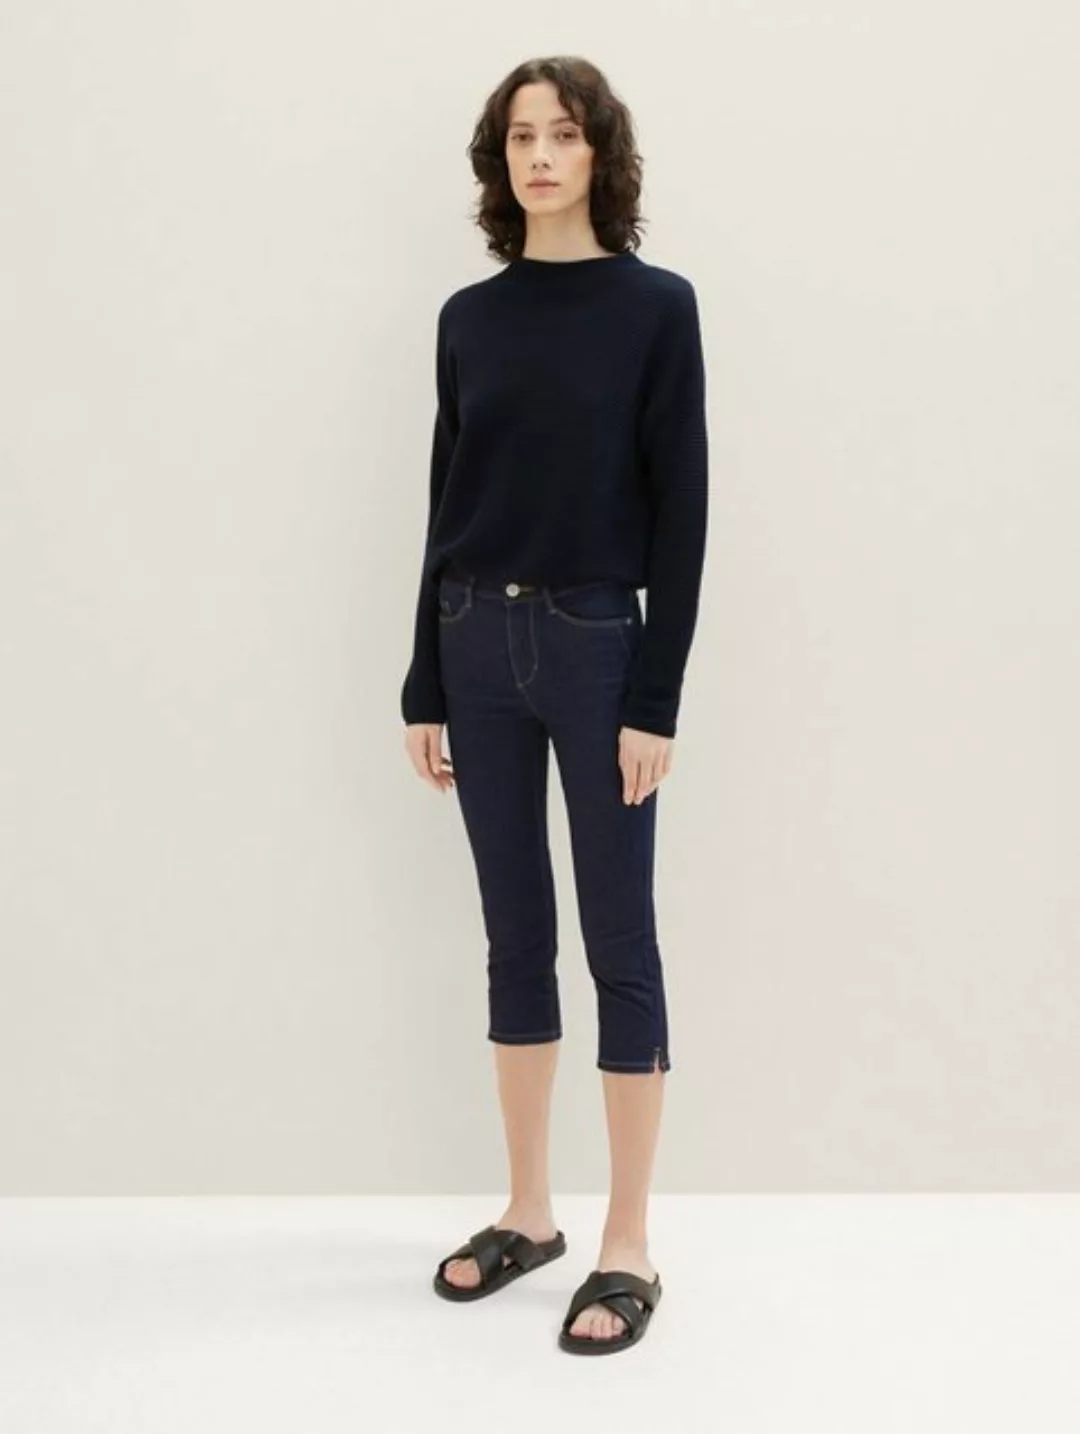 TOM TAILOR Caprihose Capri Denim Jeans Shorts KATE SLIM 5314 in Dunkelblau günstig online kaufen